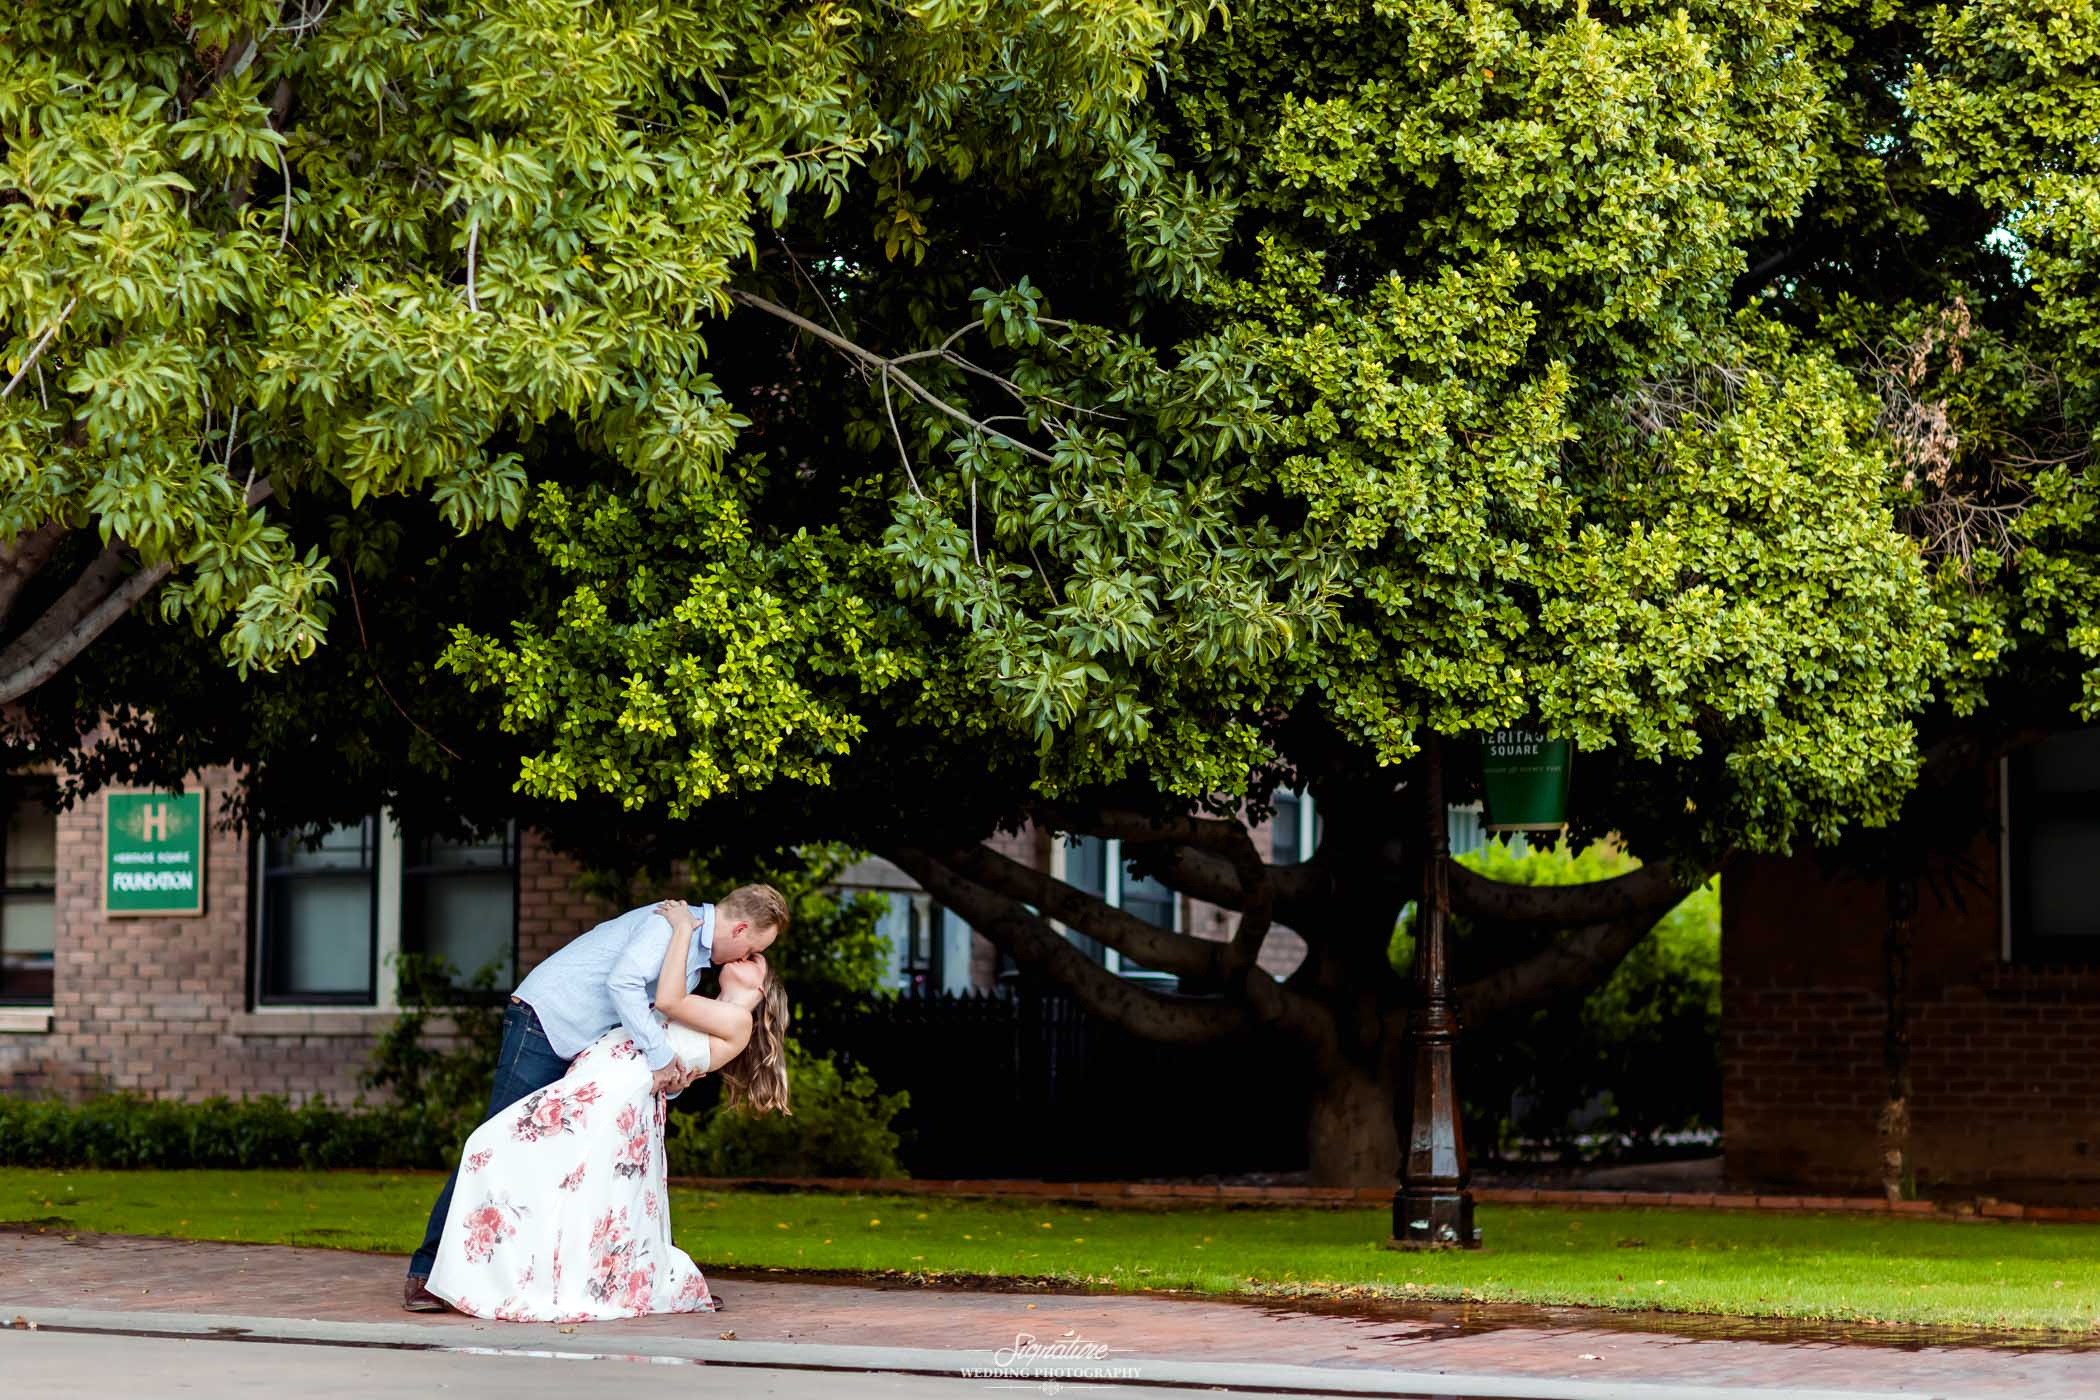 Man dipping woman kissing under tree